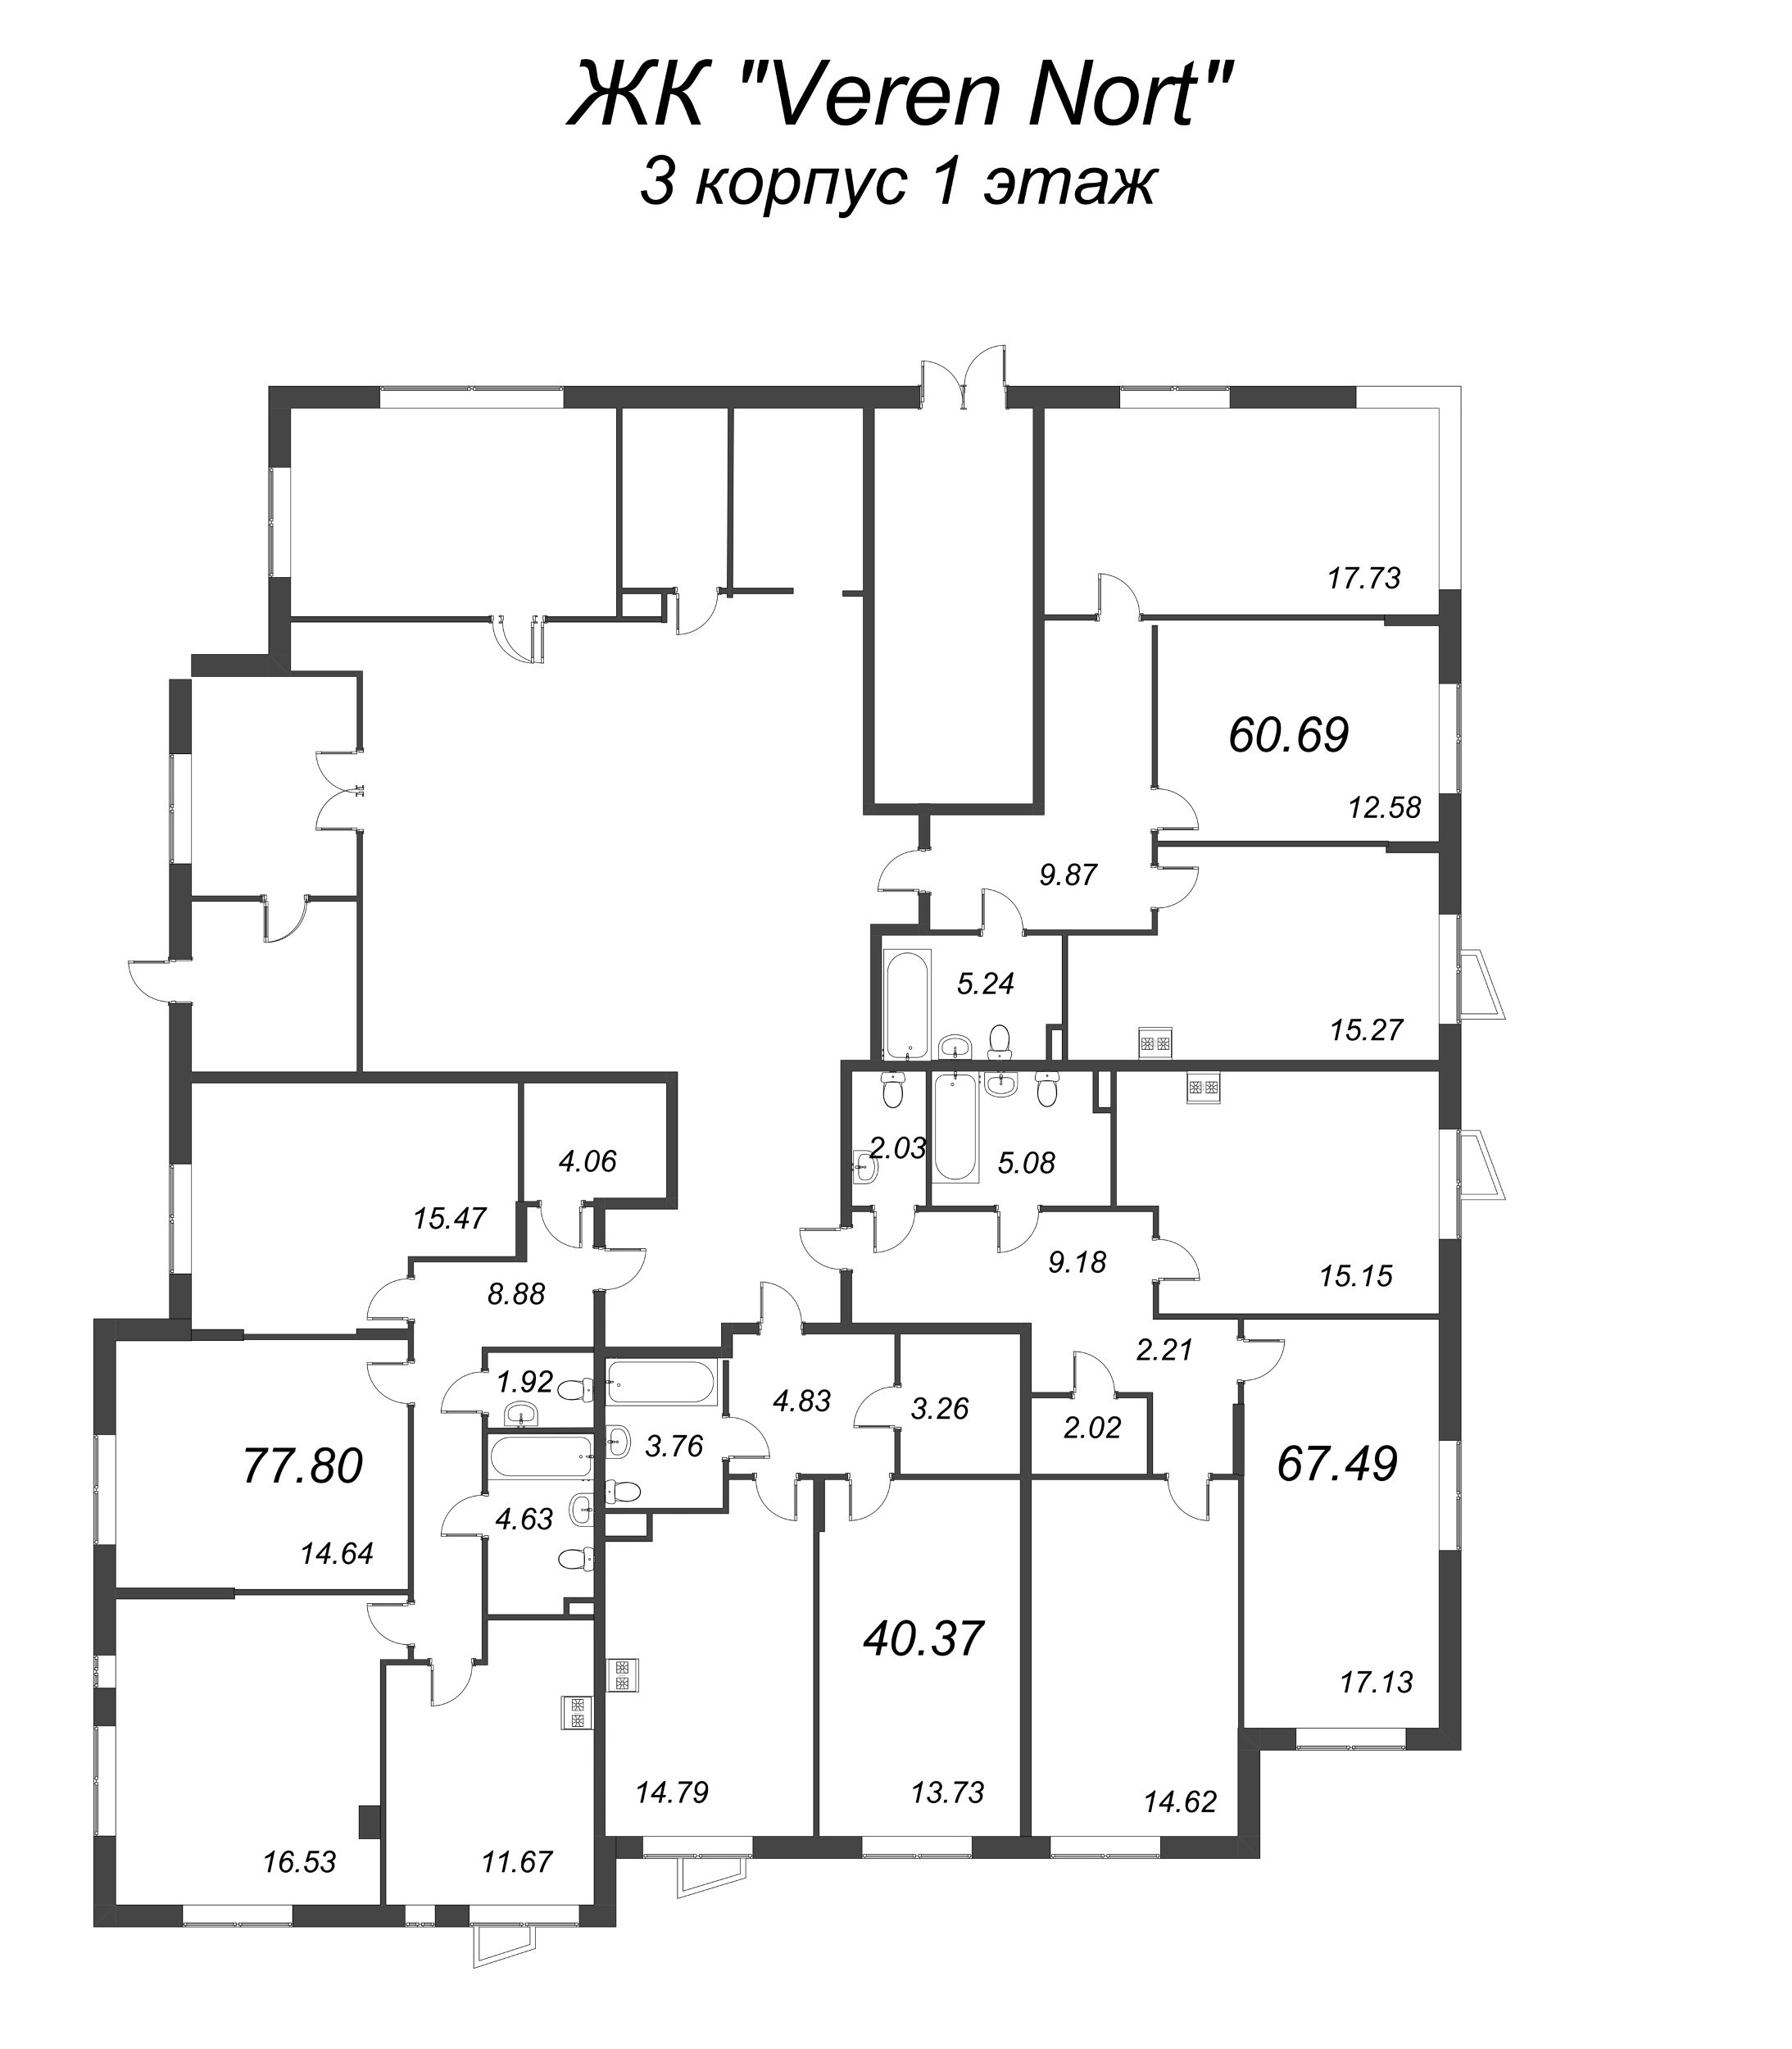 4-комнатная (Евро) квартира, 77.8 м² - планировка этажа